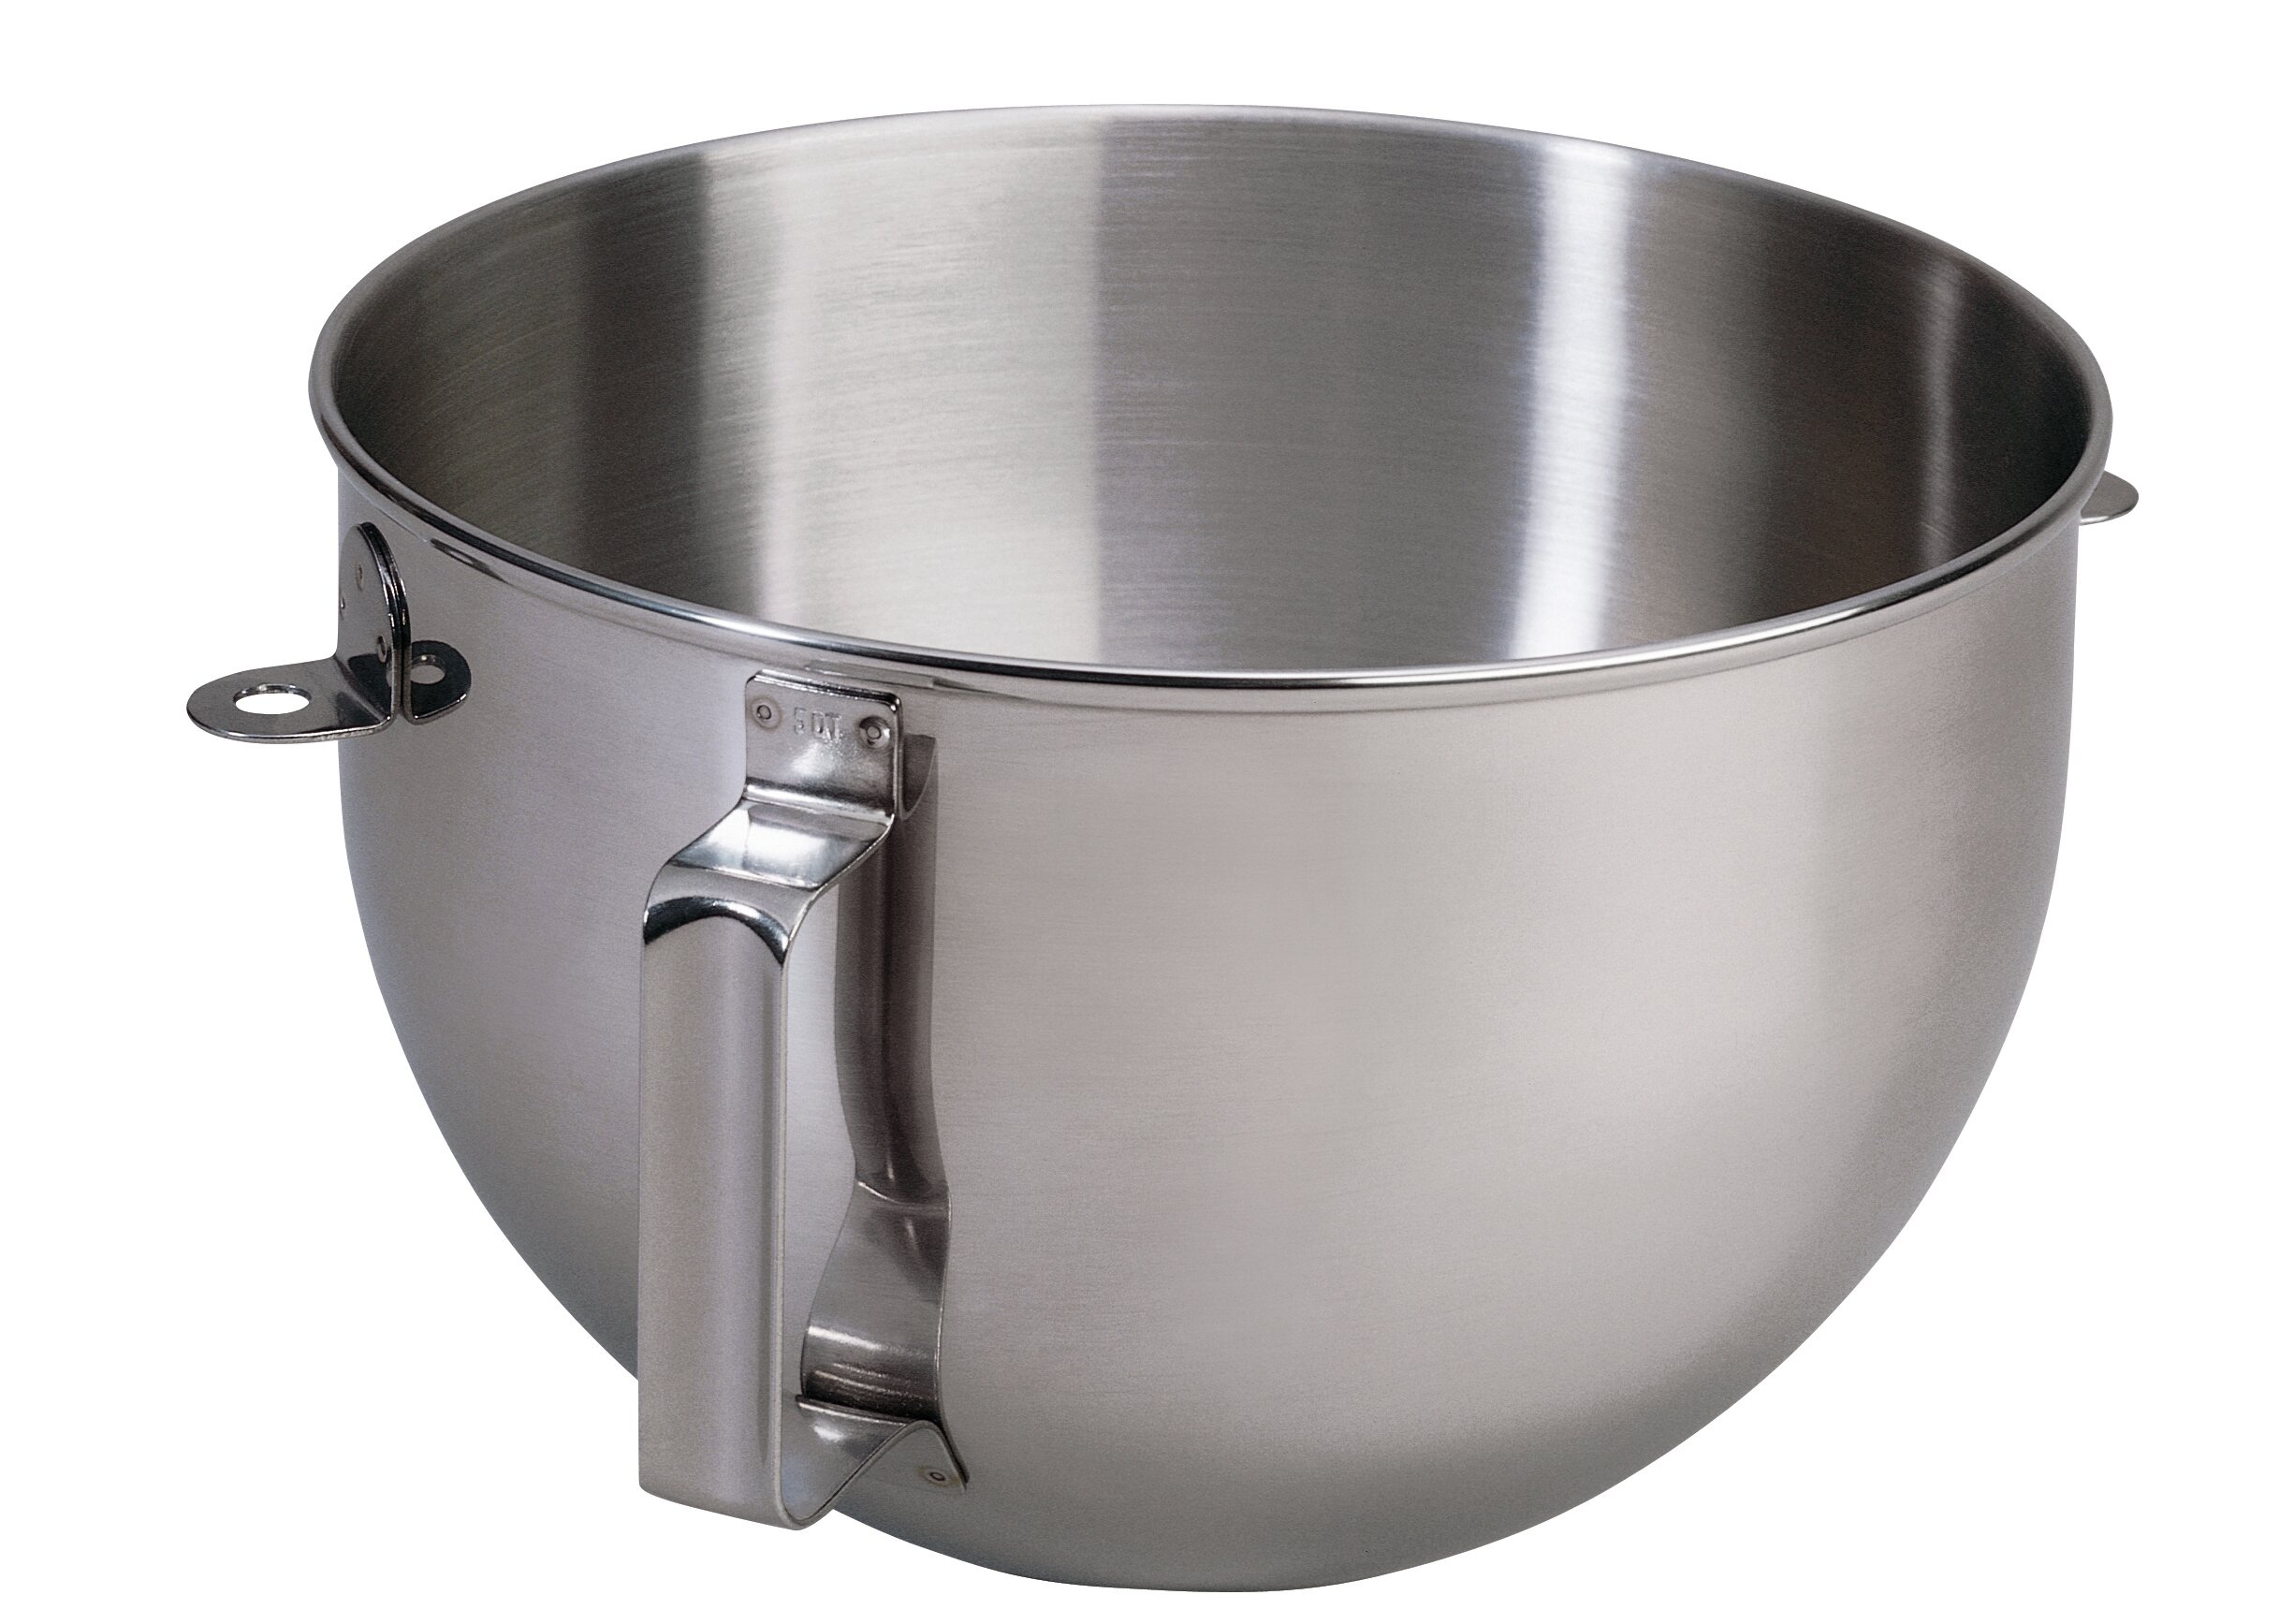 KitchenAid Artisan 5 Quart Bowl with Handle